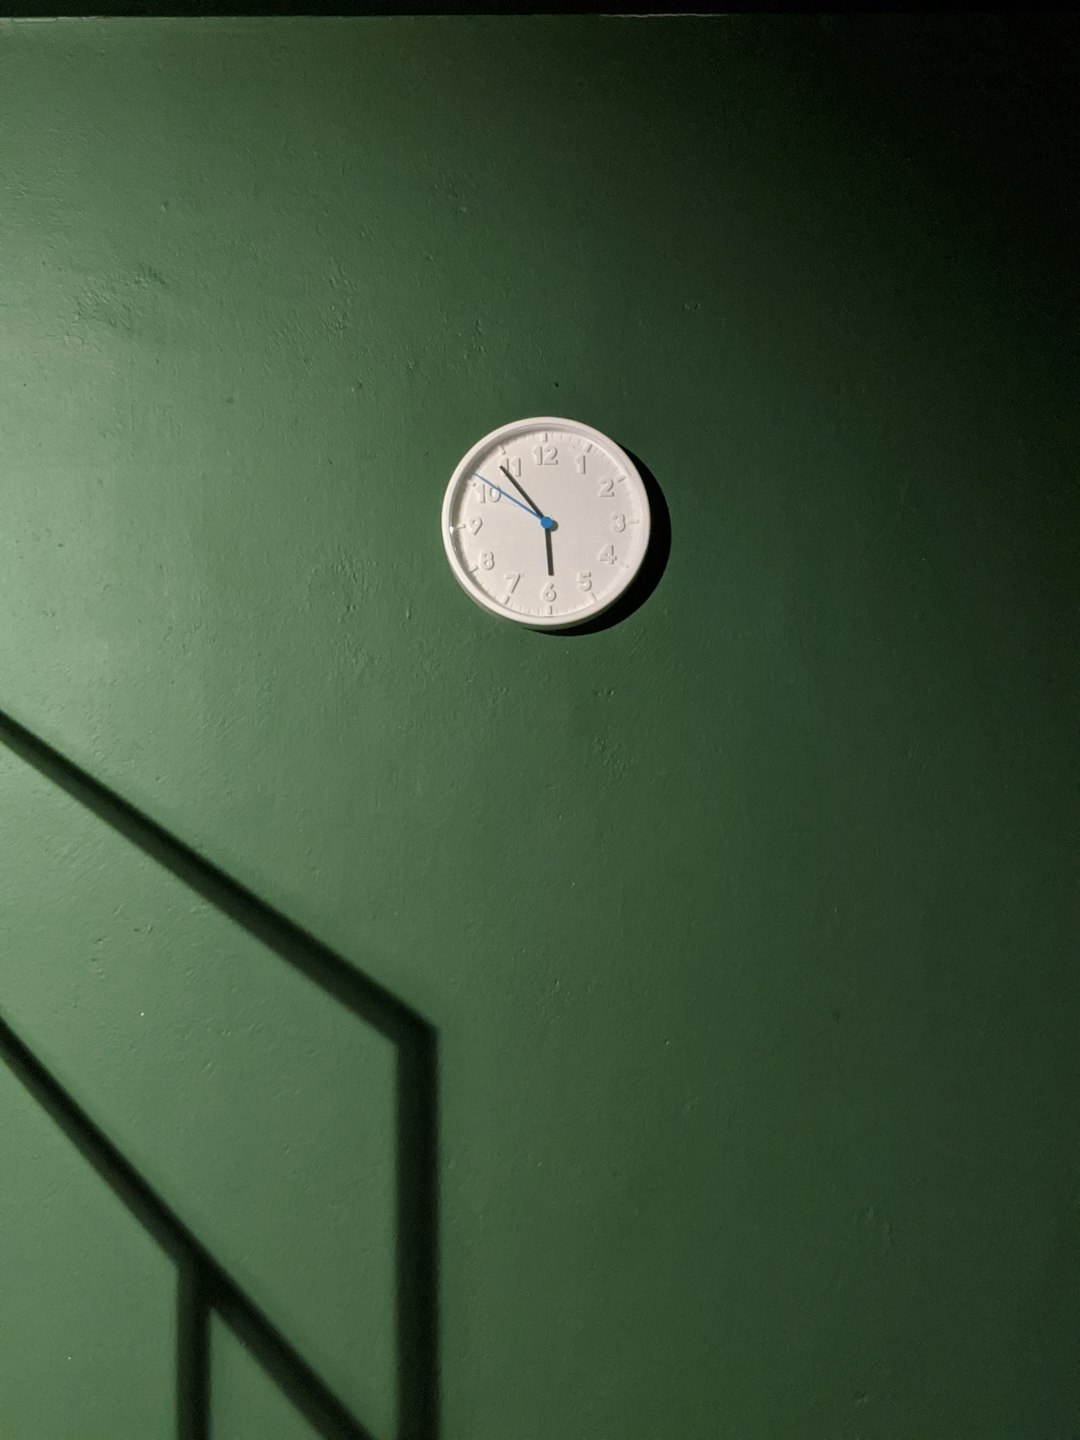 analog wall clock displaying 5:54 time